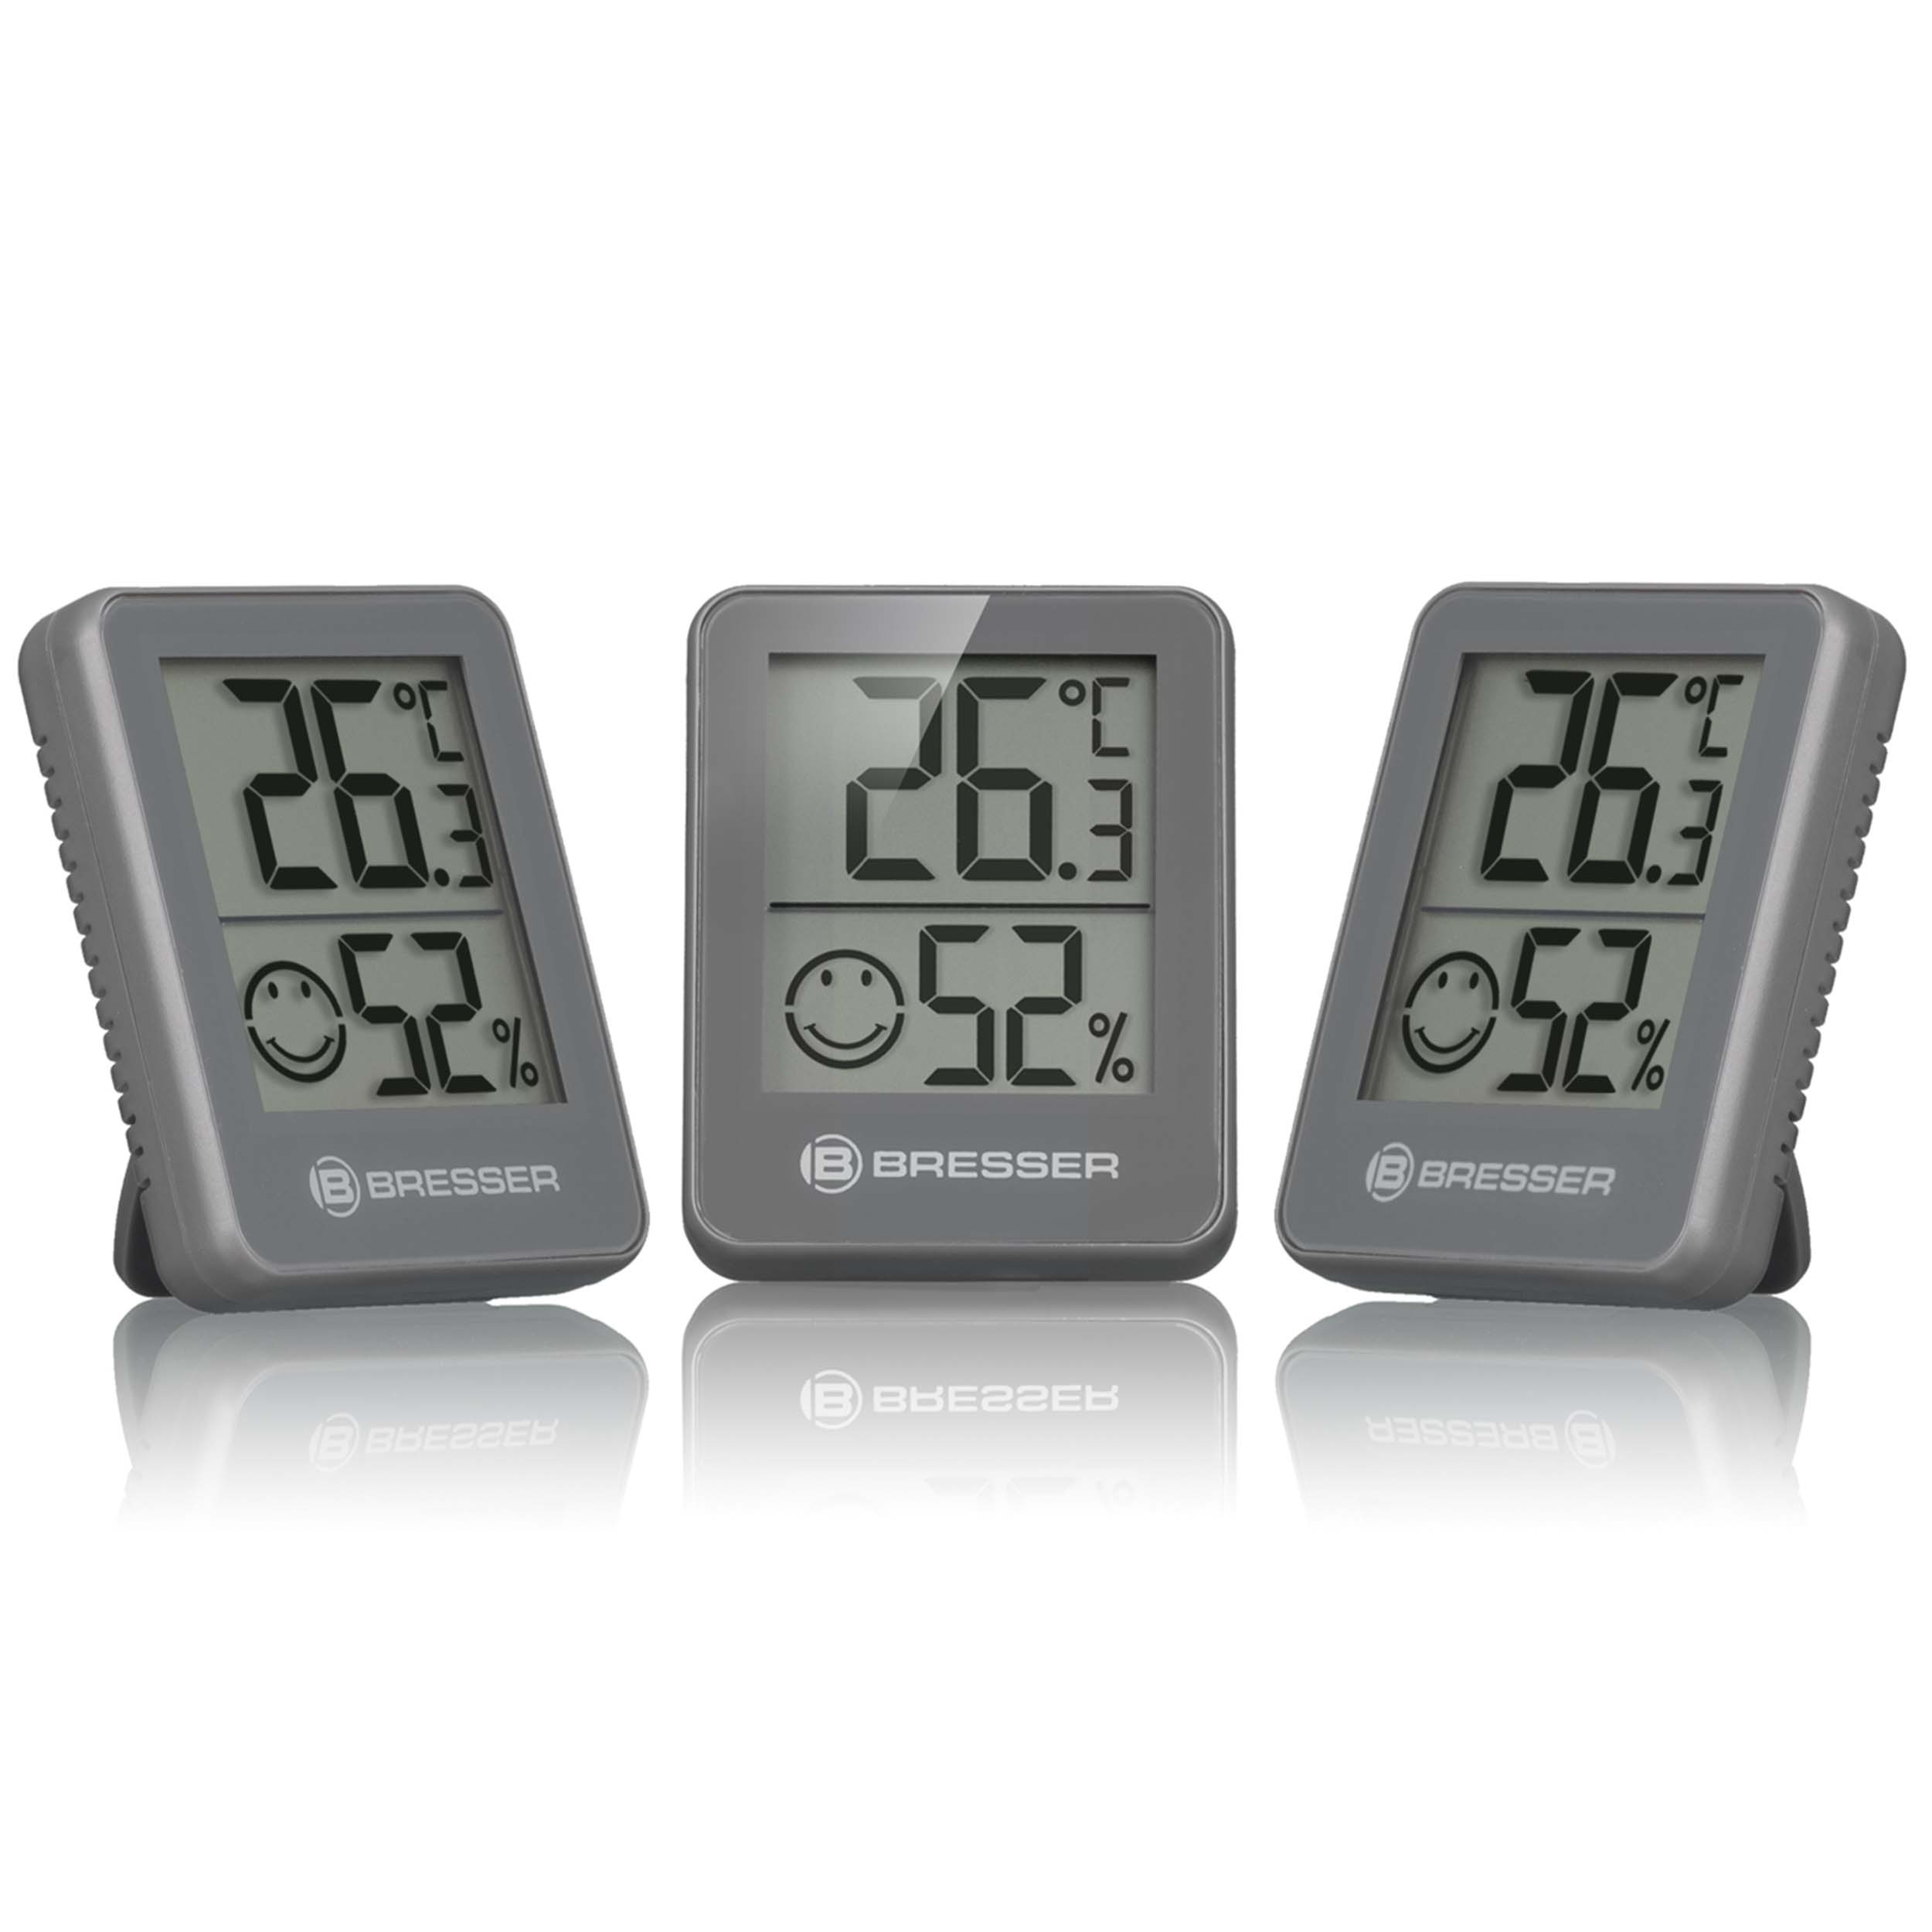 BRESSER ClimaTrend Hygro Indicator 3-piece Set Thermo-Hygrometer